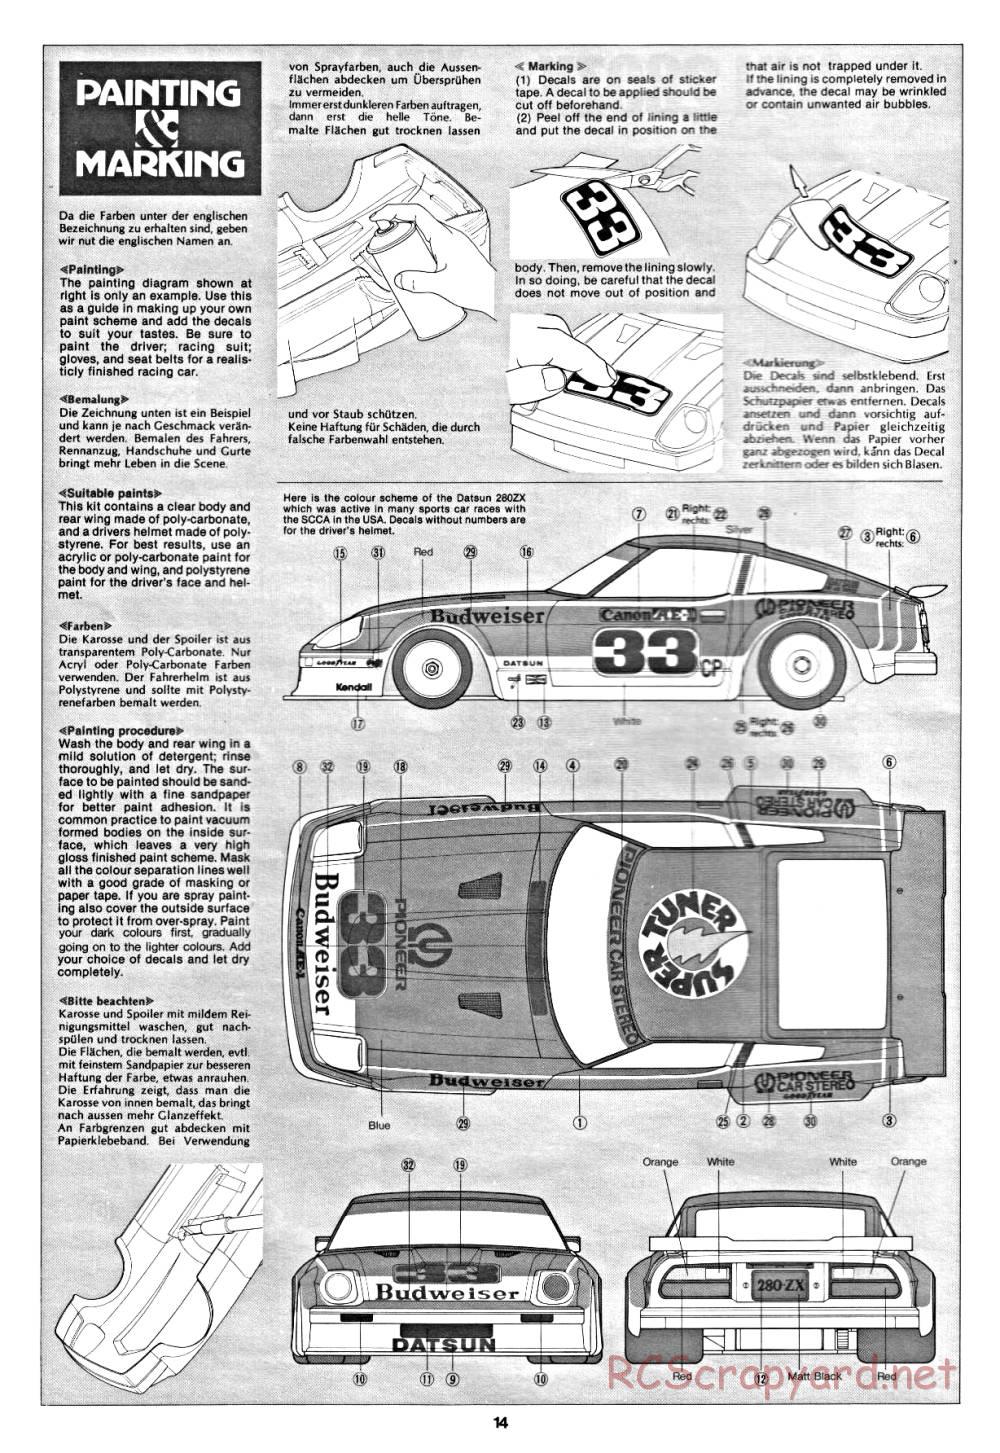 Tamiya - Datsun 280ZX - 58022 - Manual - Page 14